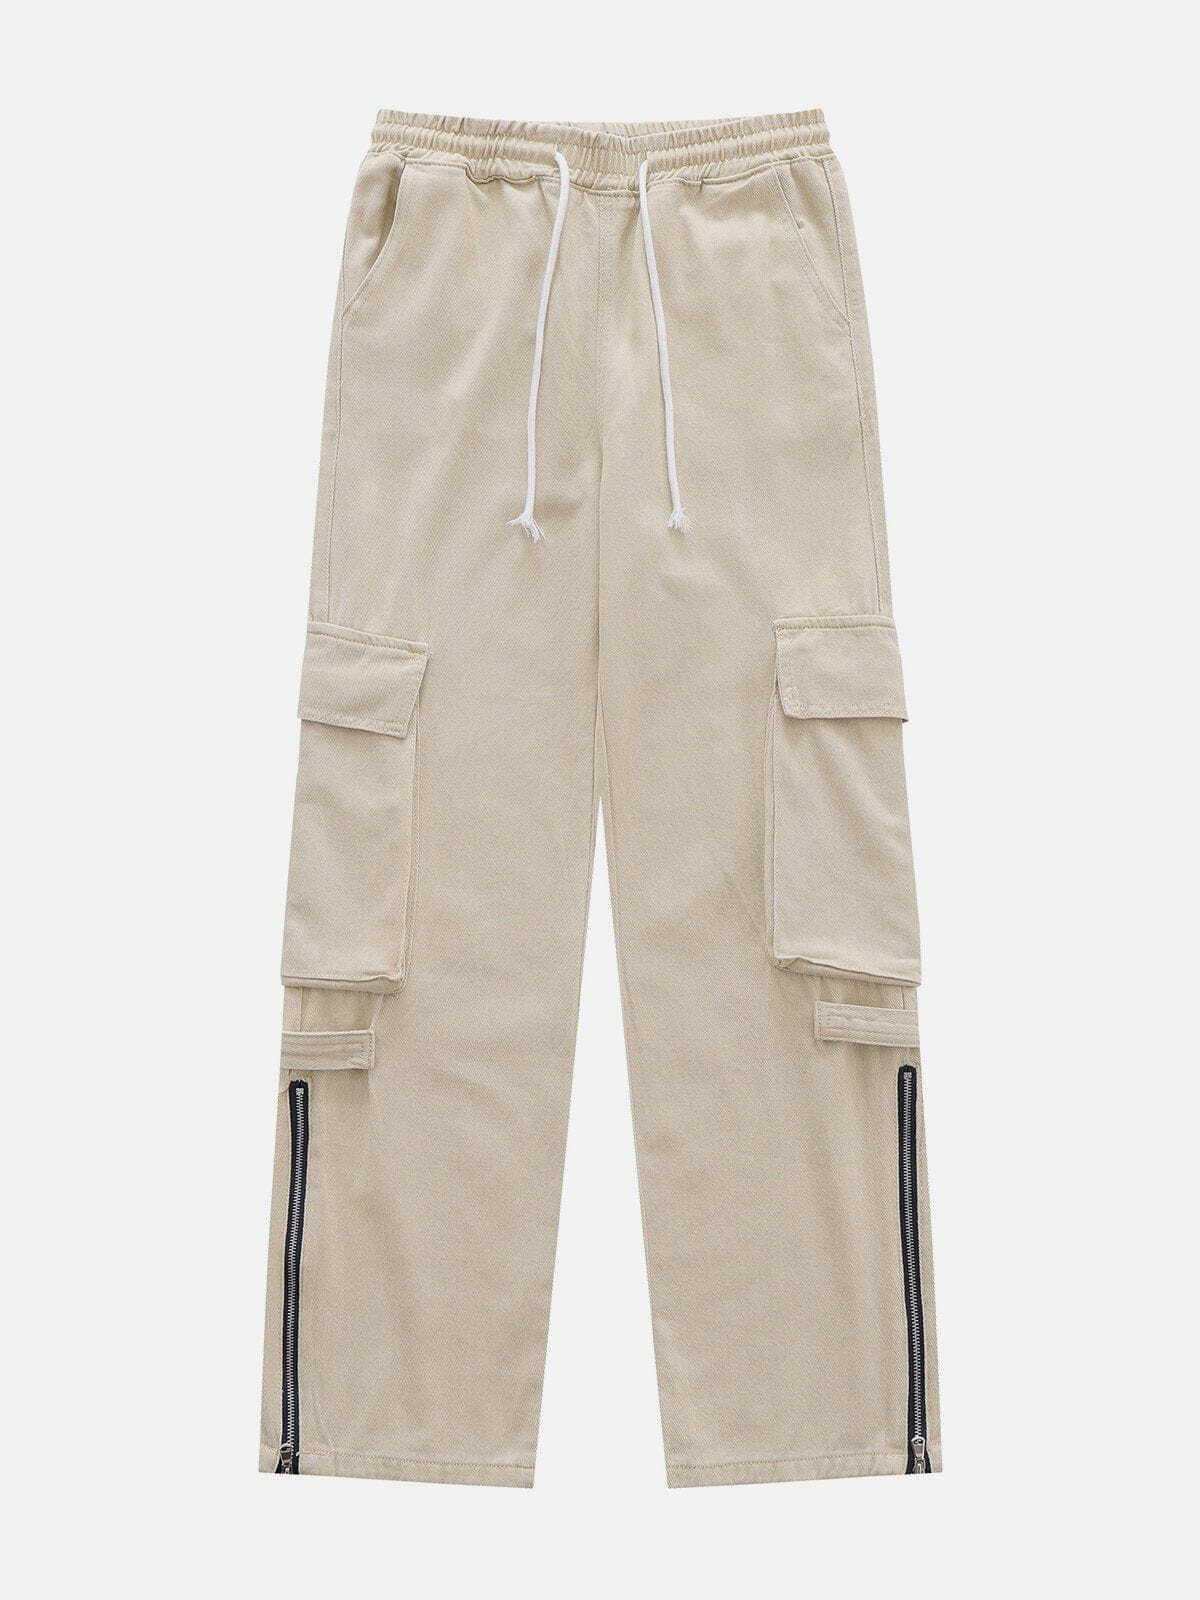 retro zipup pants edgy & vibrant streetwear 8497